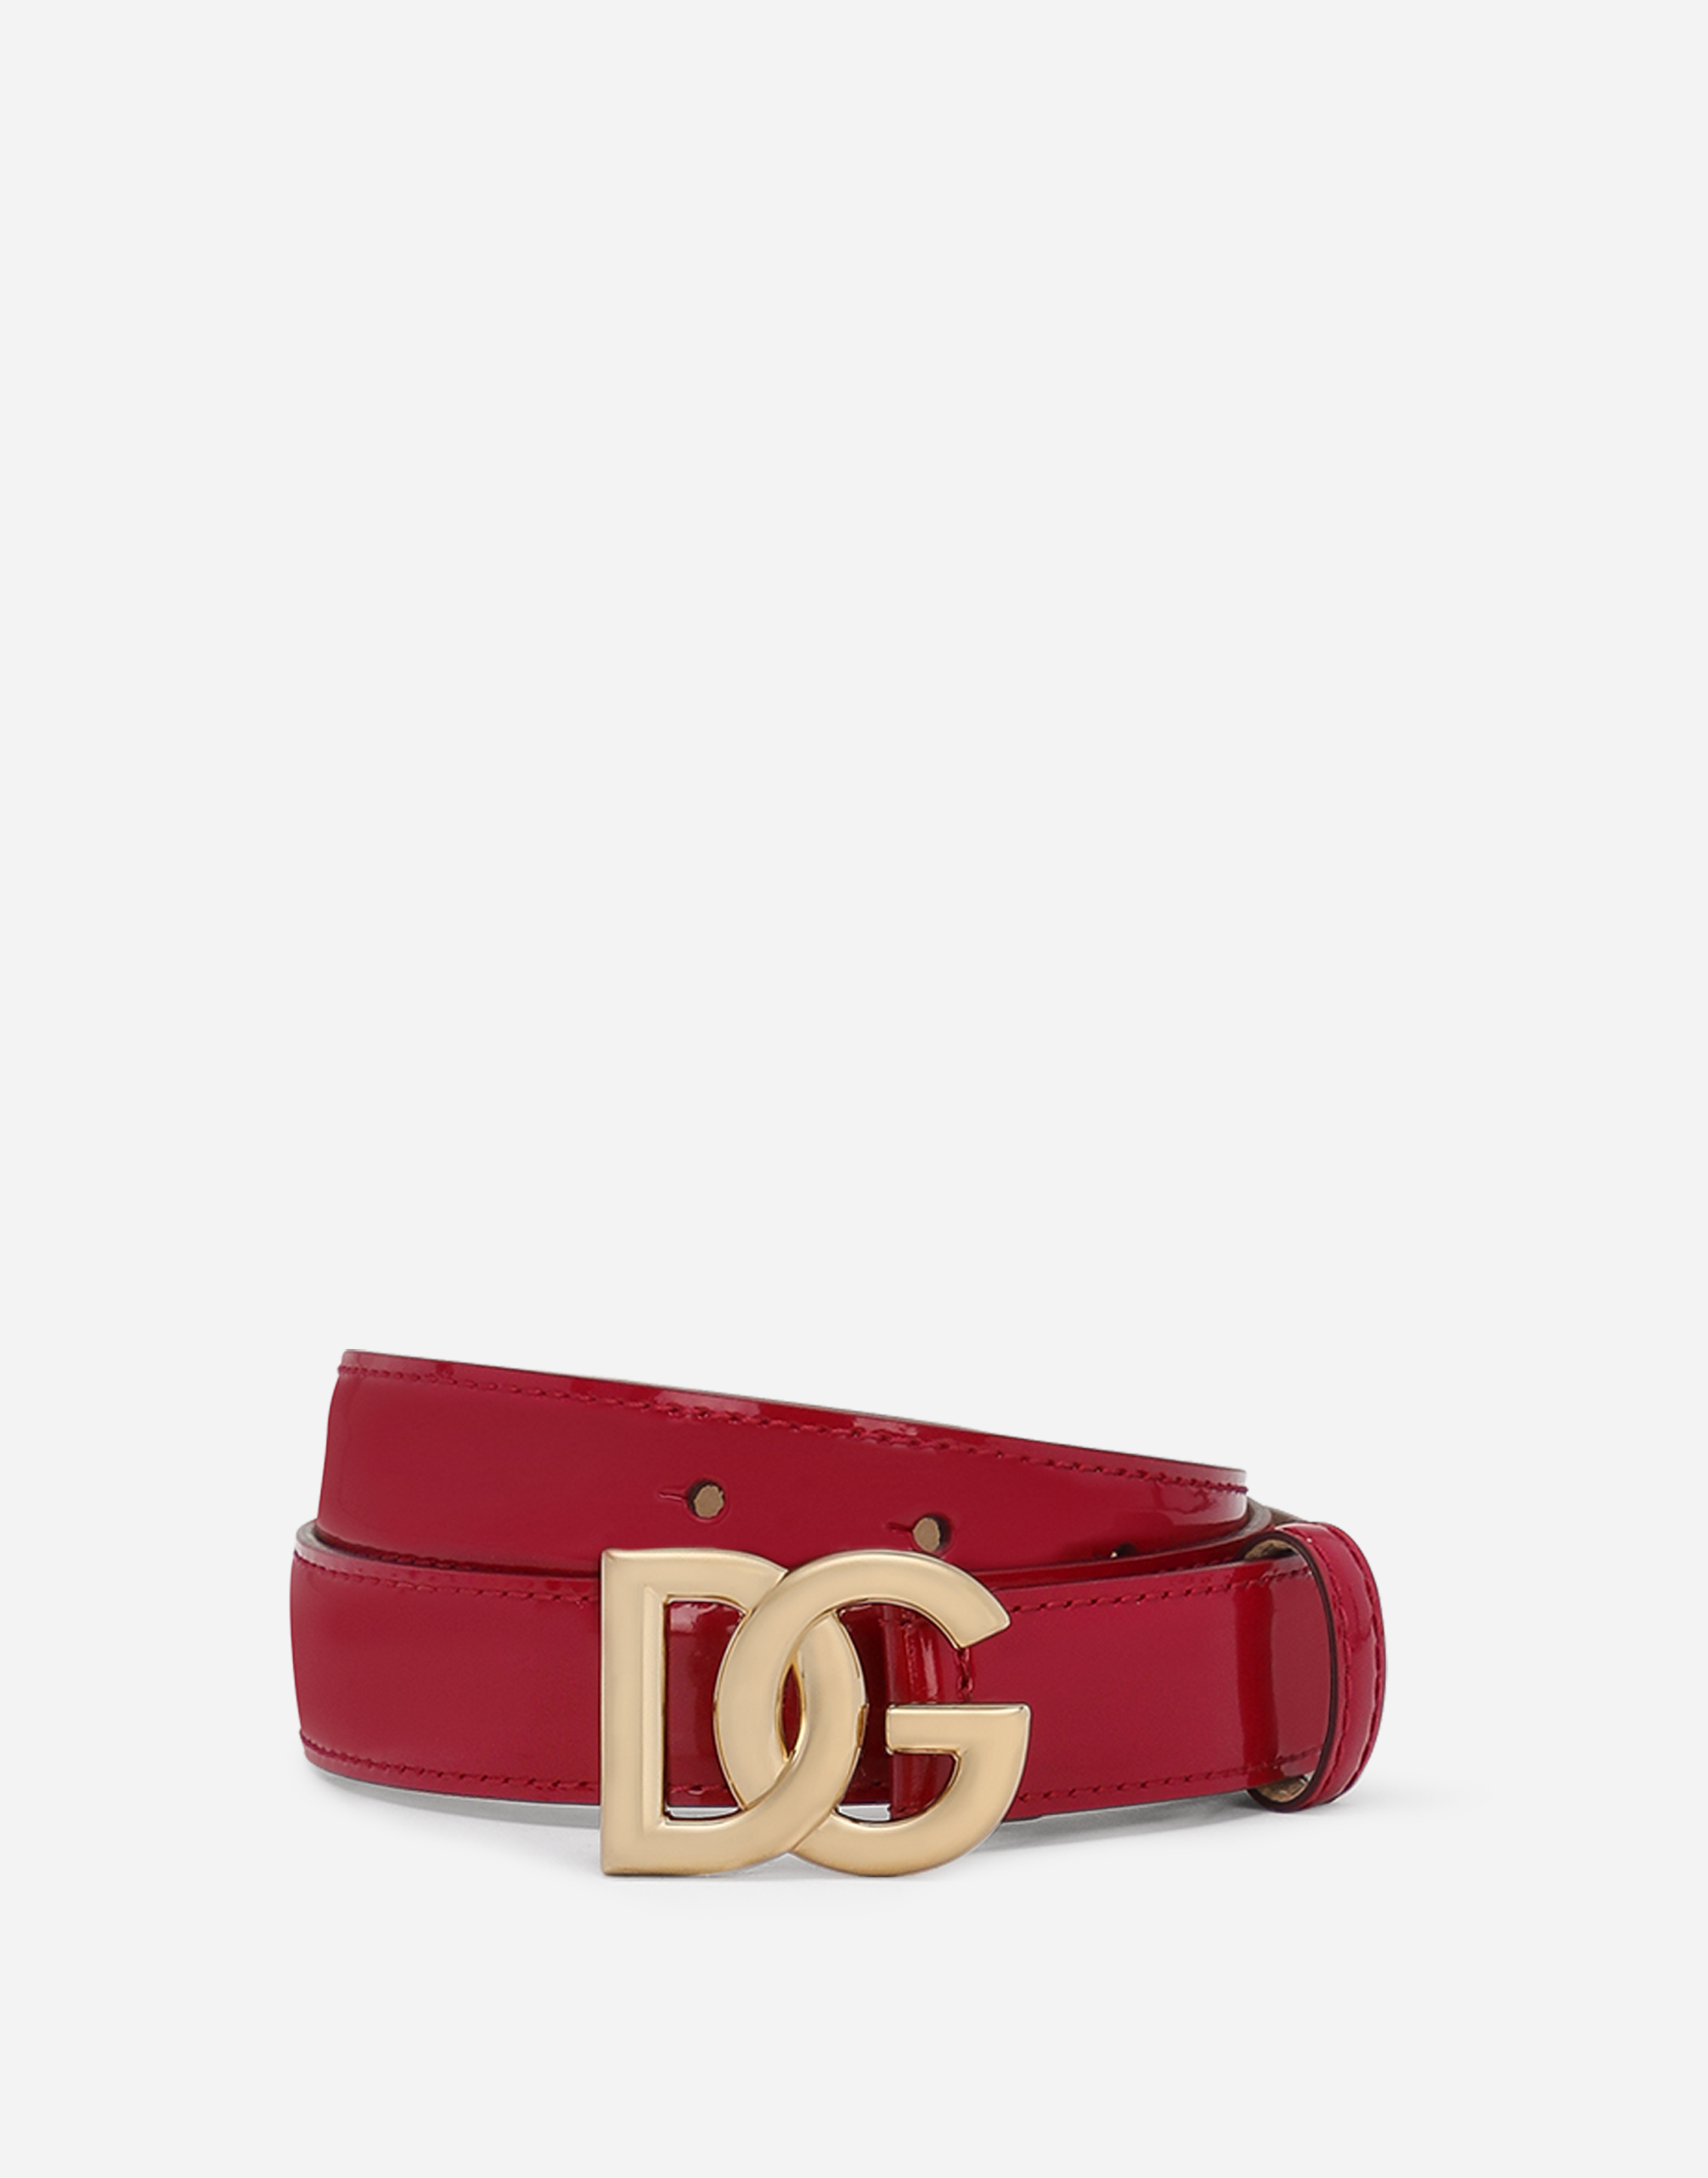 Polished calfskin belt with DG logo in Fuchsia